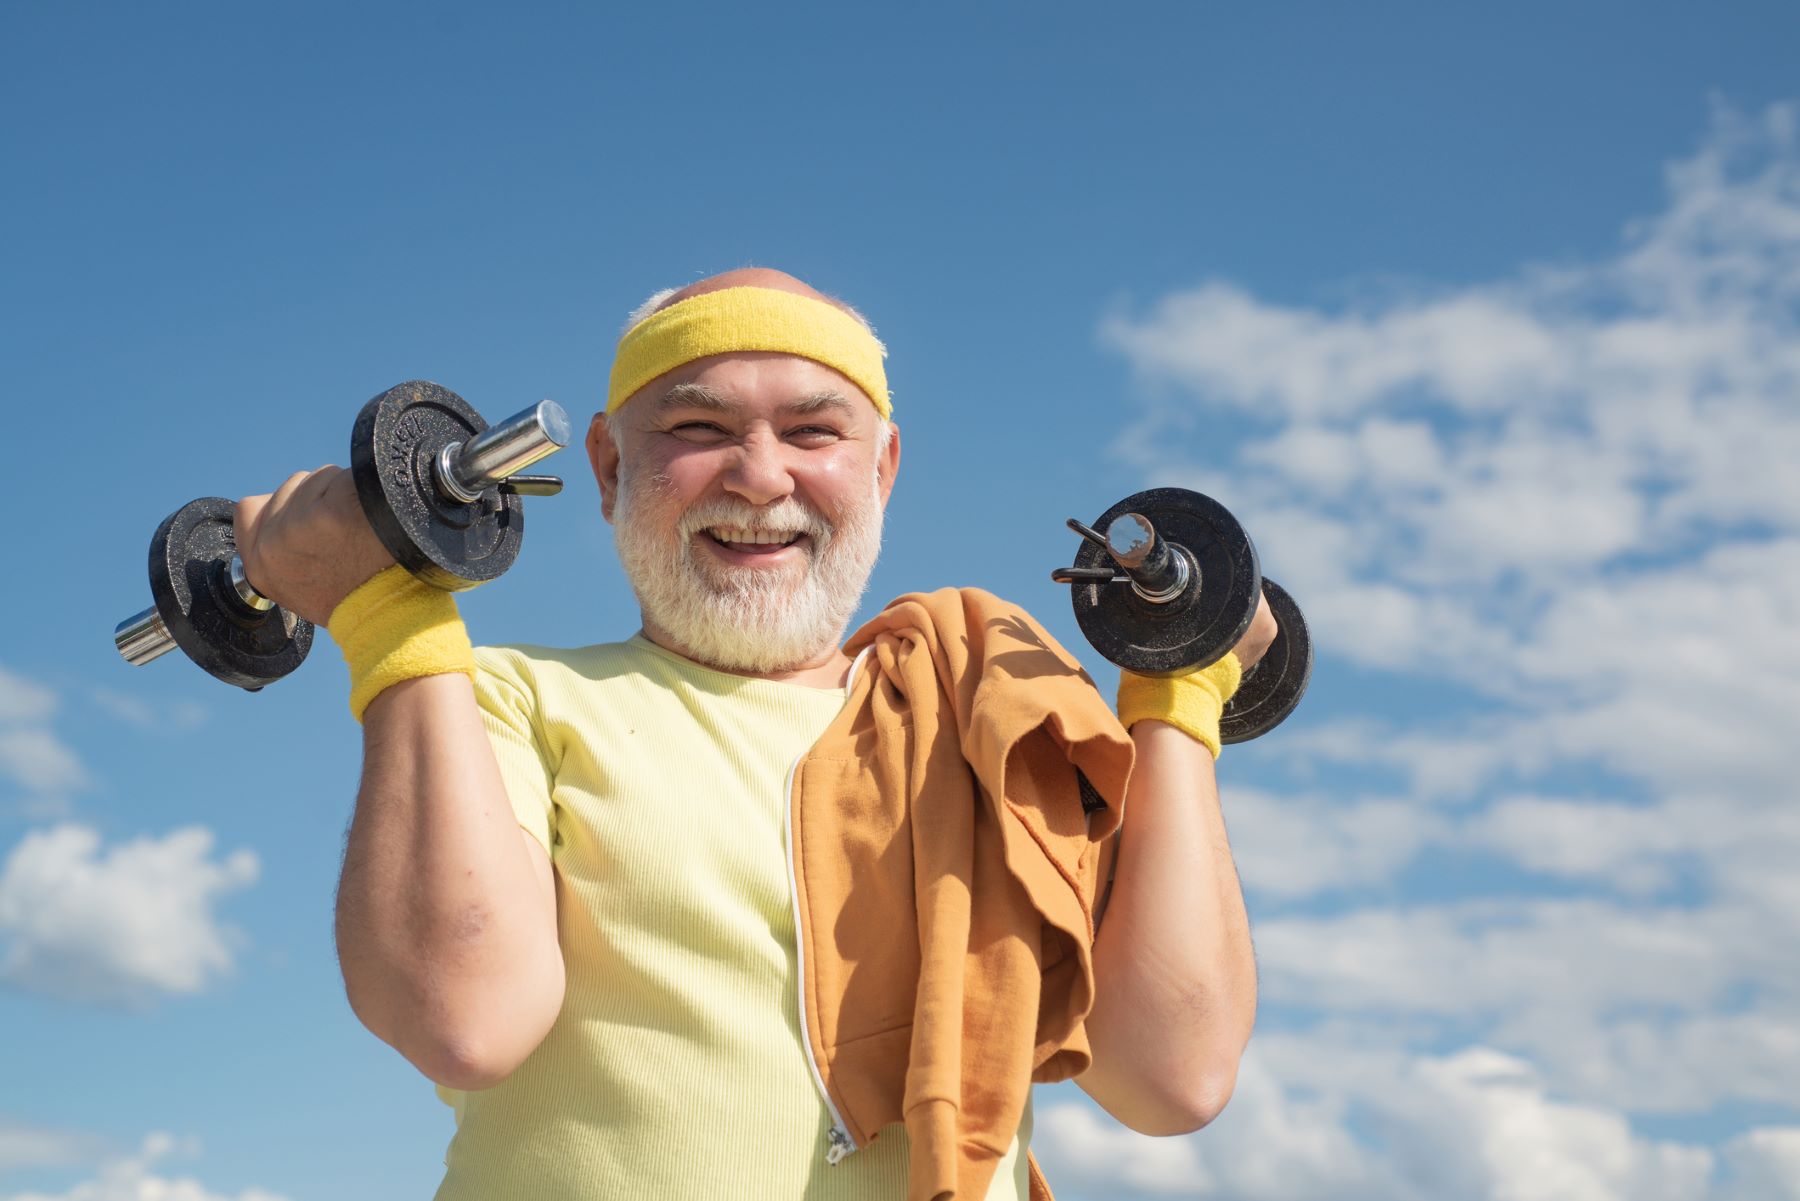 Smiling senior man exercising outside with dumbbells